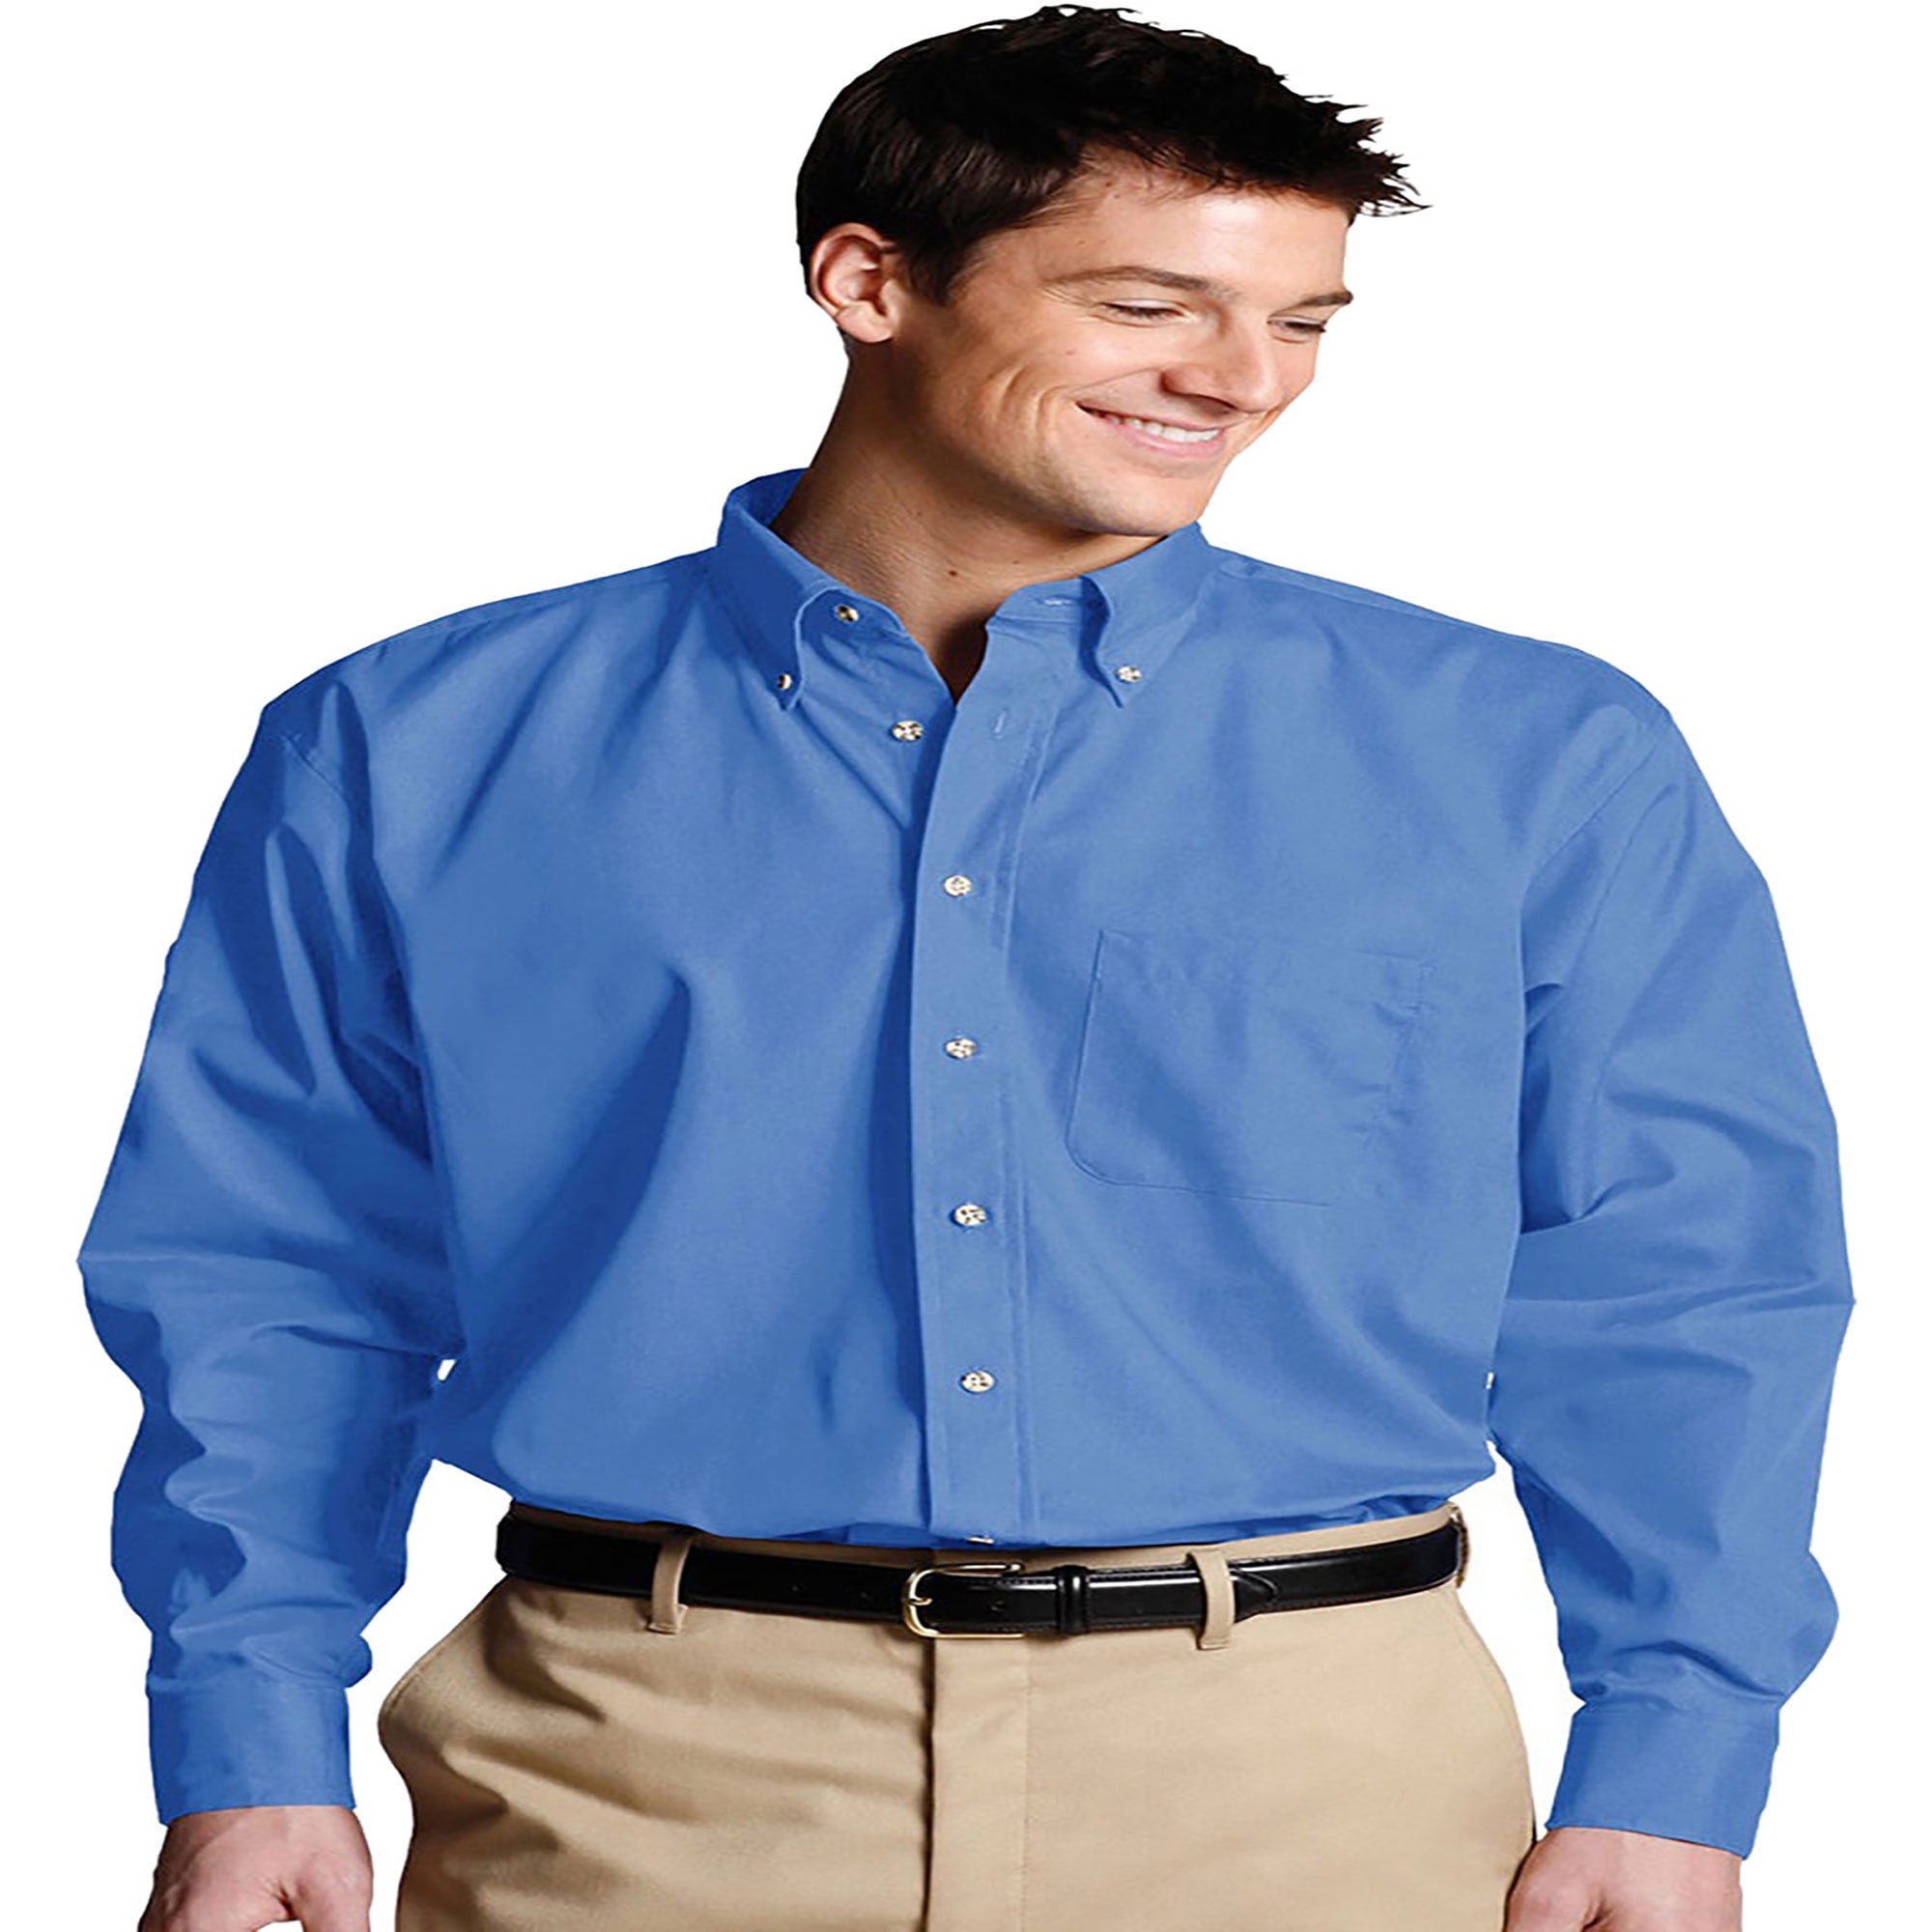 Men's Long Sleeve Button Up Shirts